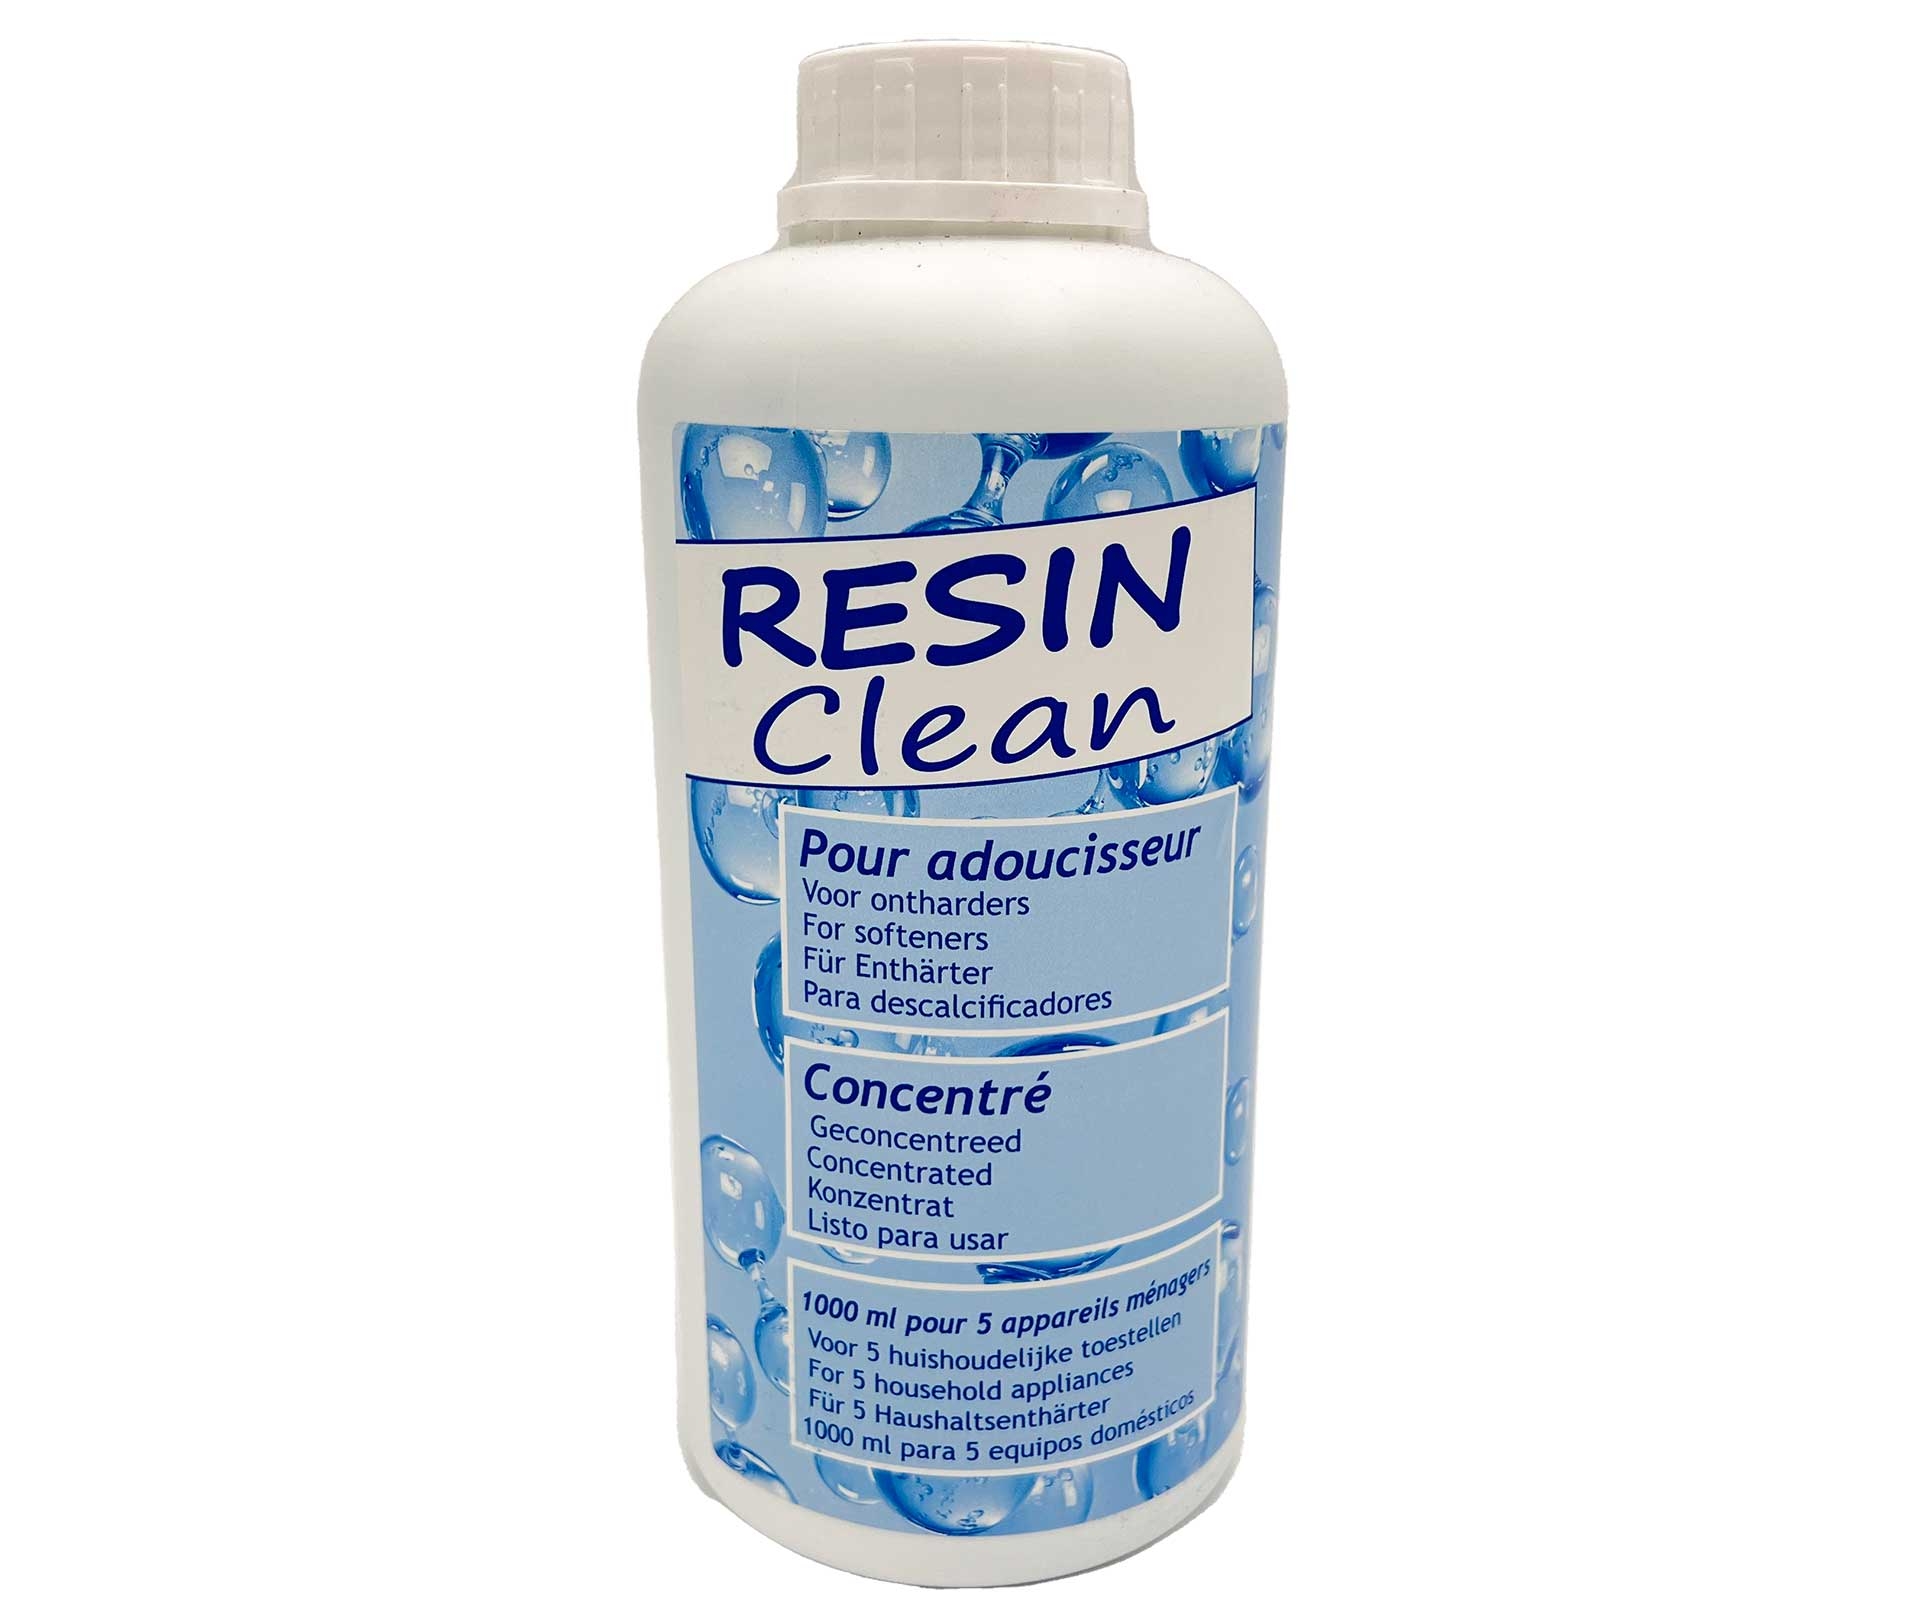 RESIN CLEAN resin cleaner for softening plants 1000 ml